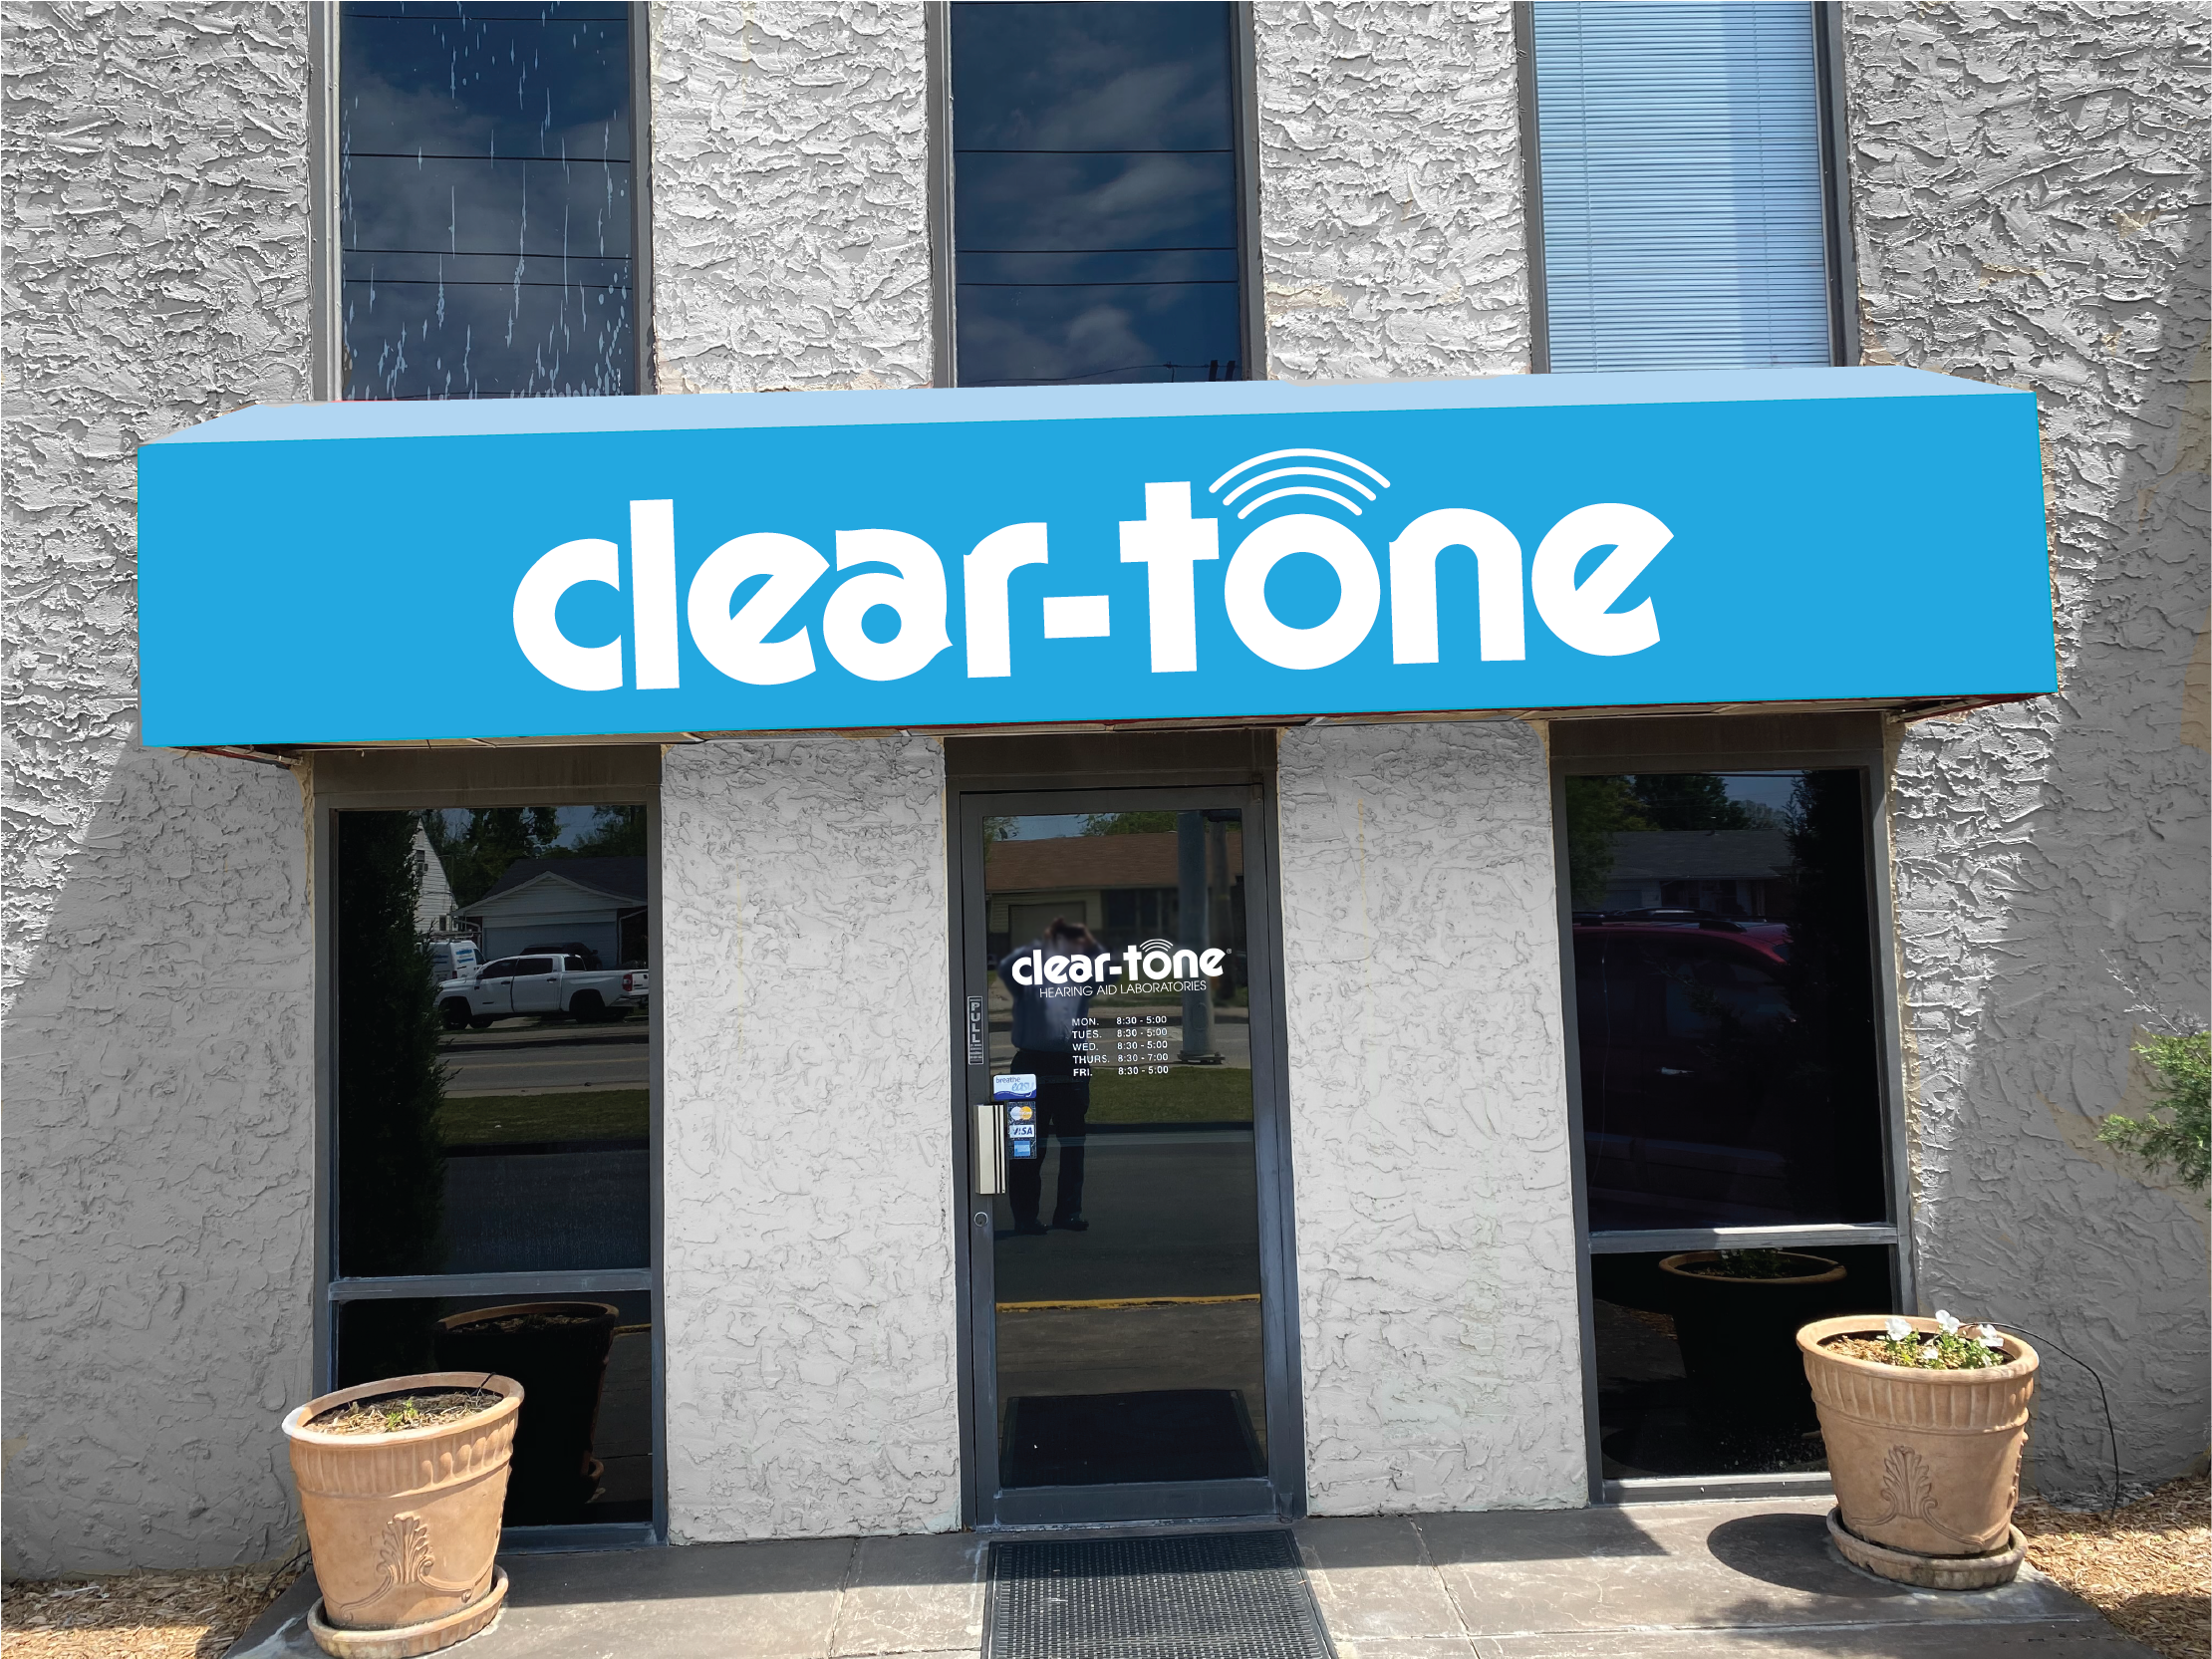 Cleartone building exterior